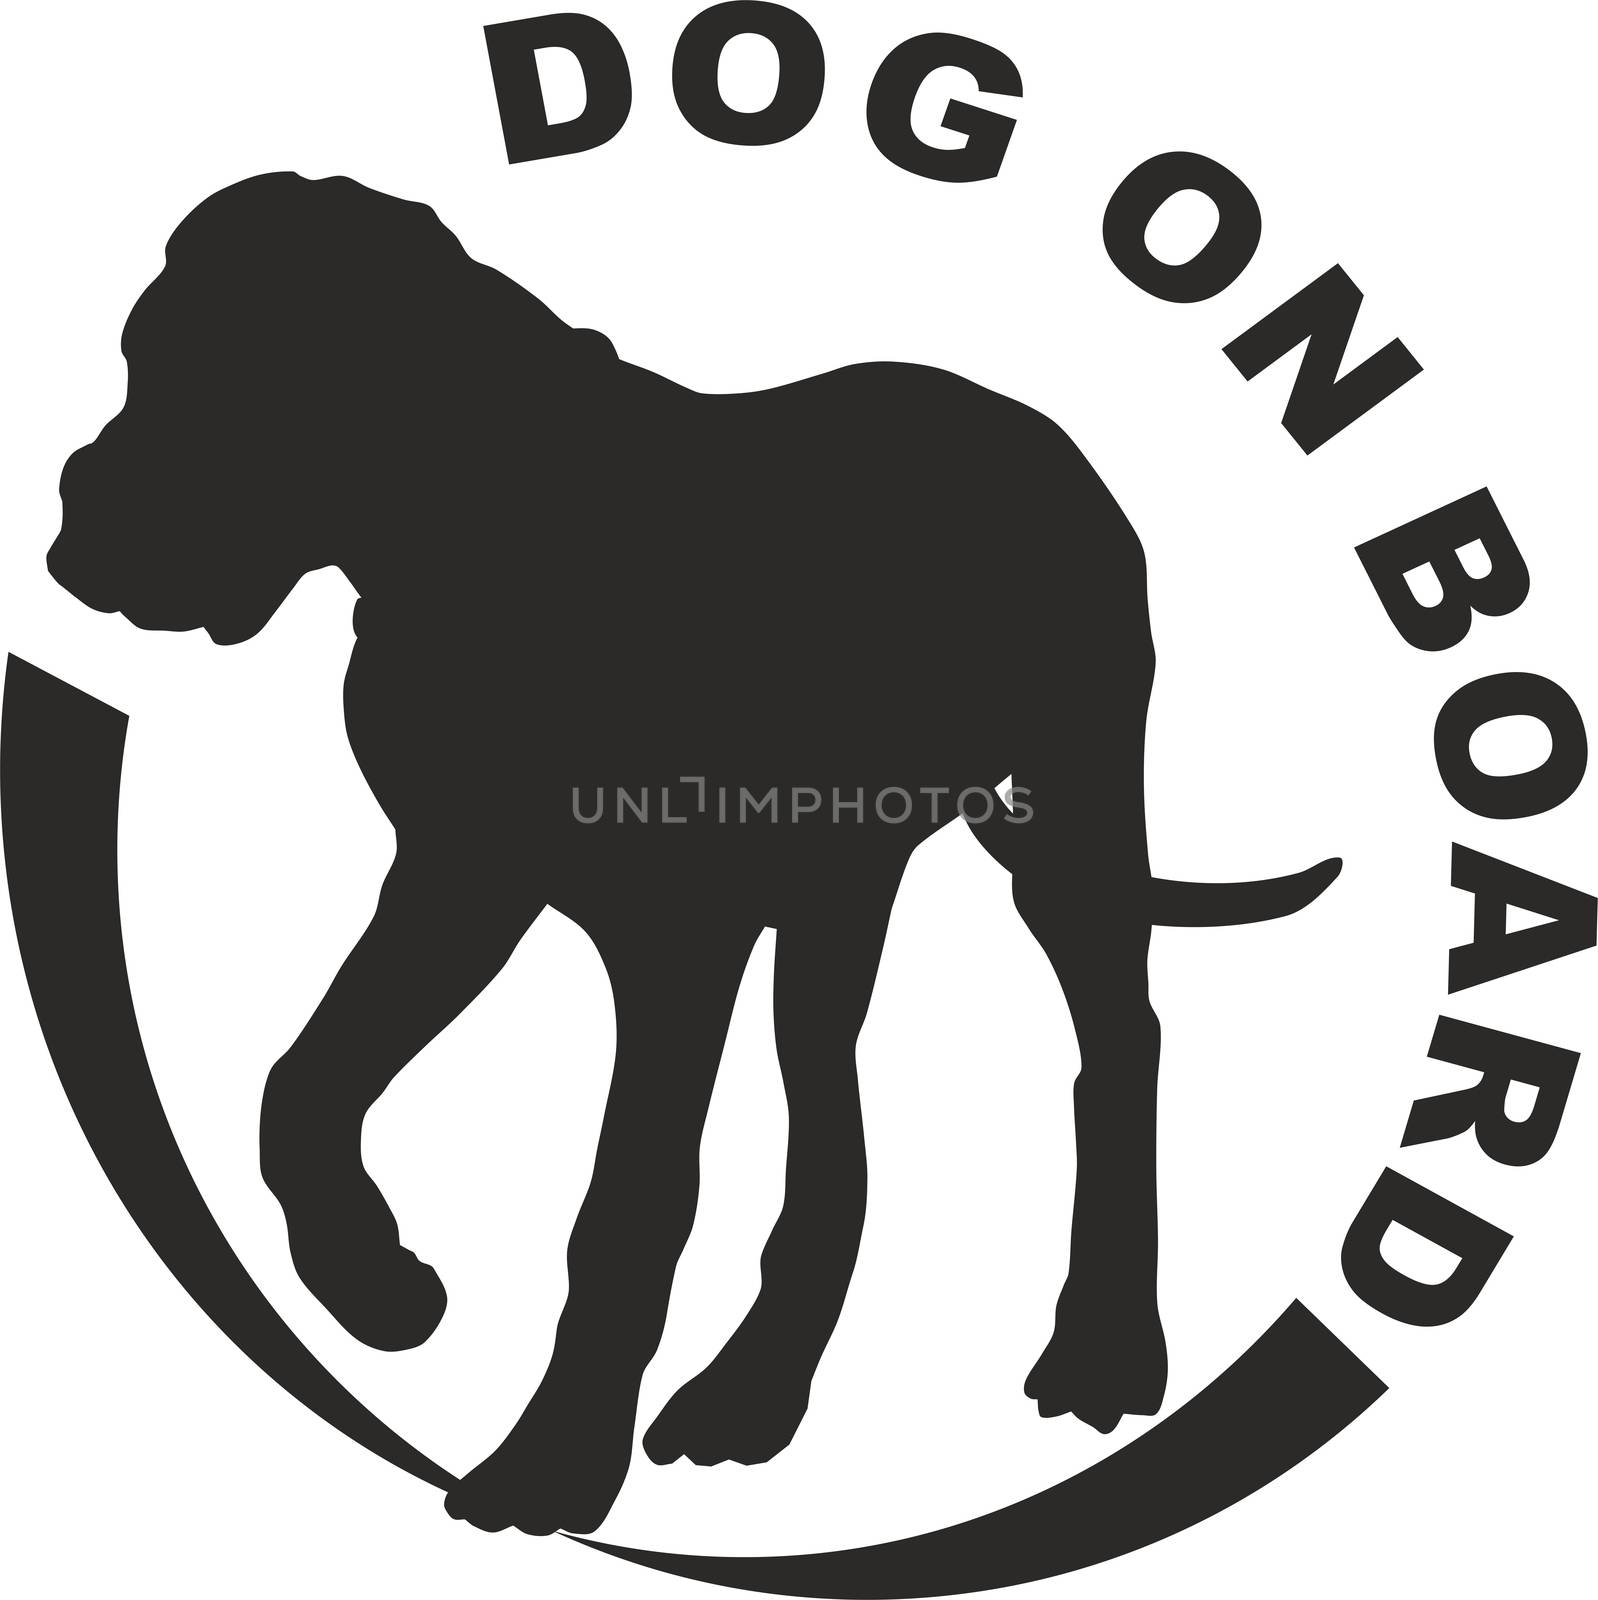 Illustration symbol dog on board